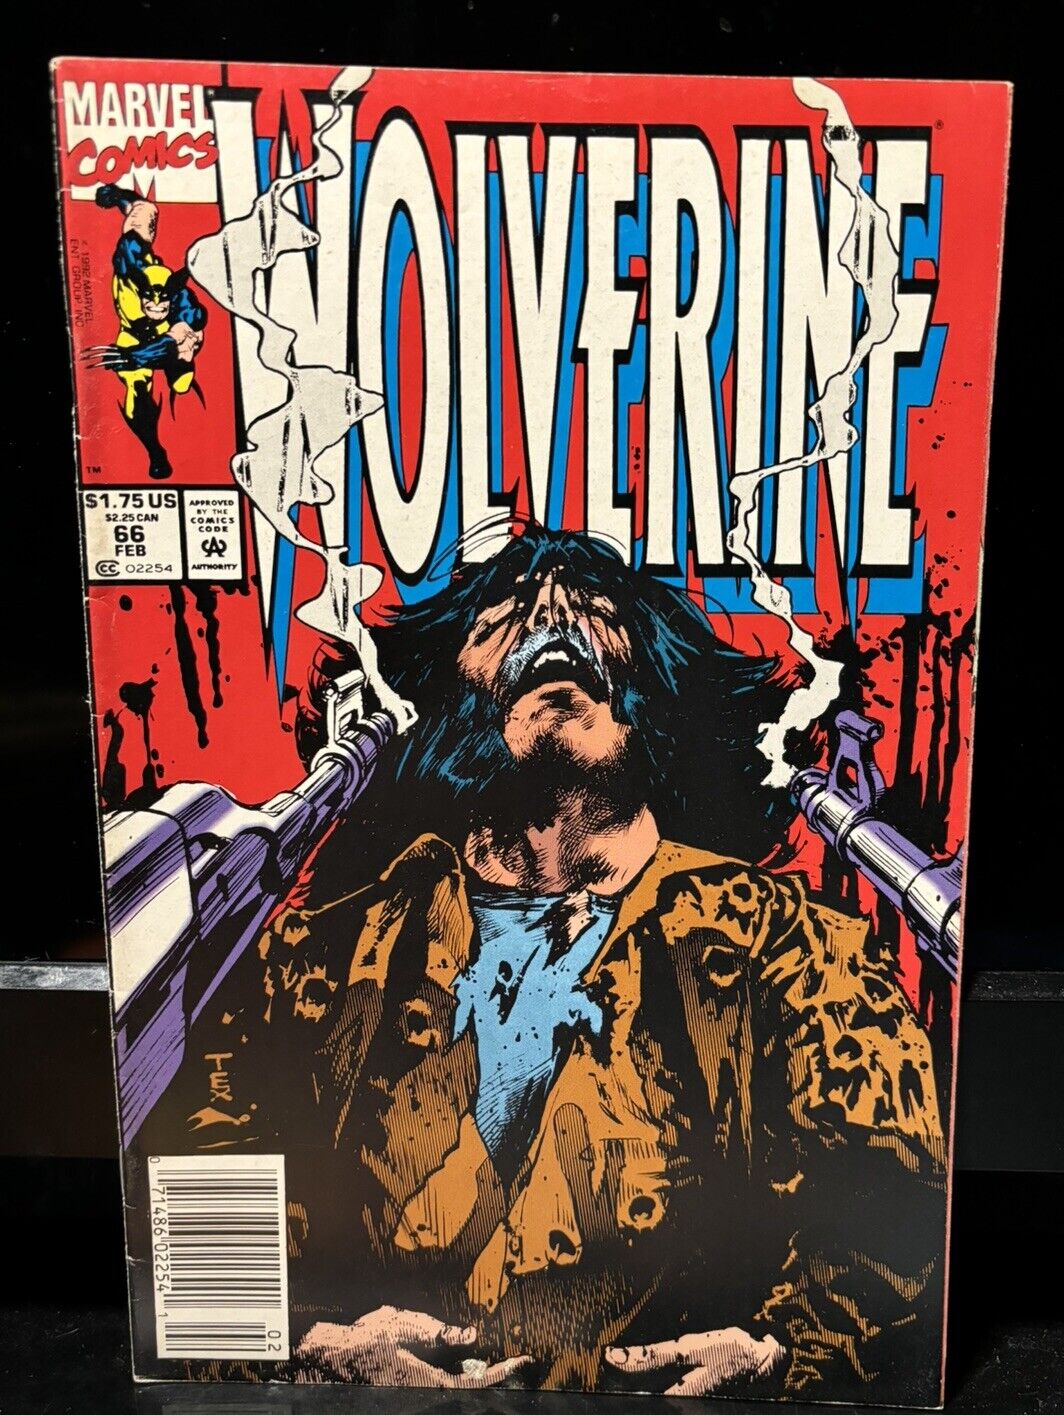 WOLVERINE #66 NM 1993 Marvel Comics - Texeira art/cover - X-Men app